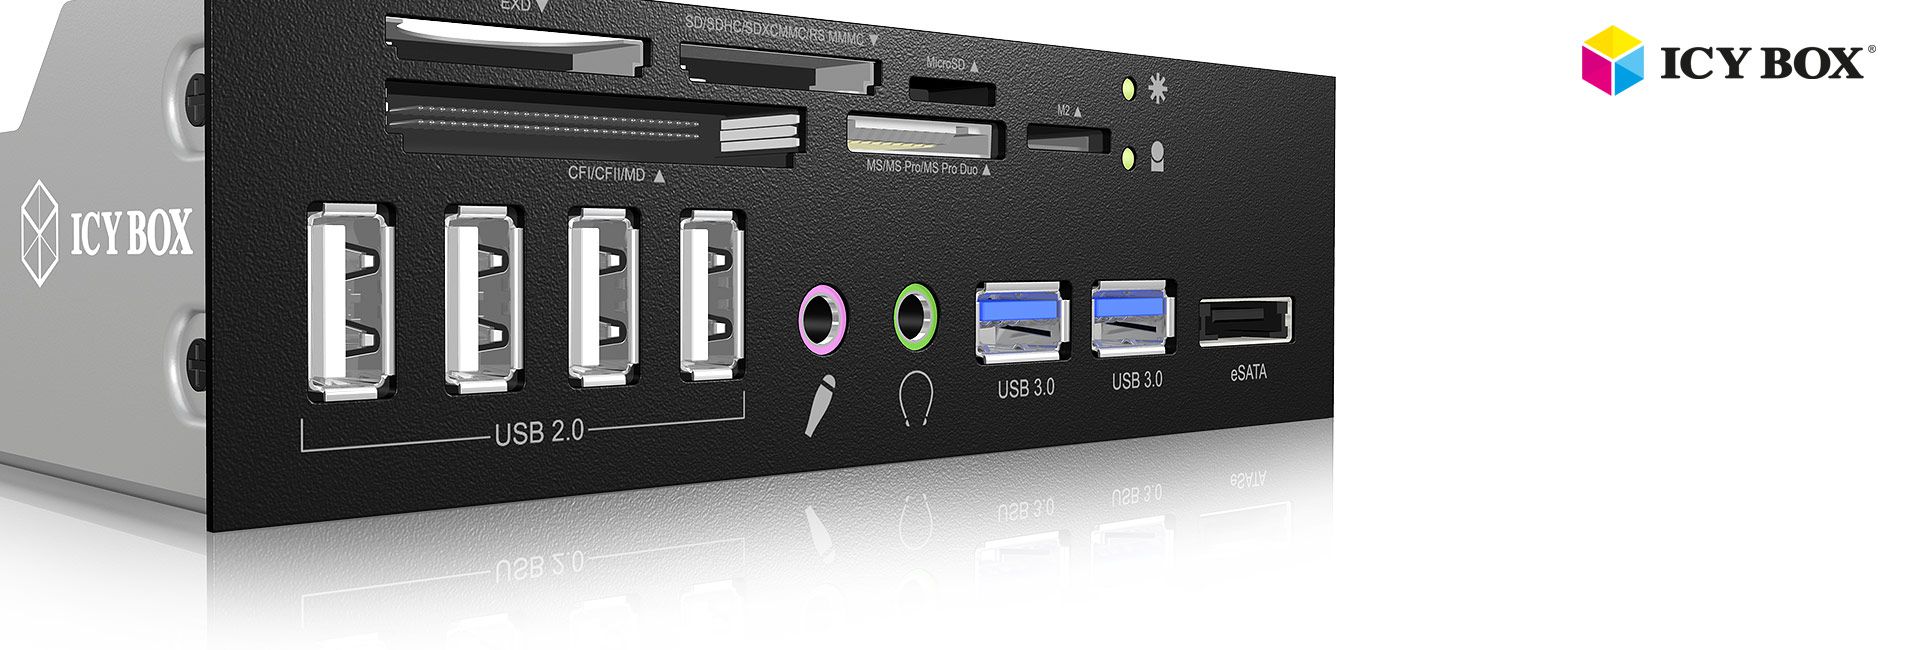 ICYBOX IB-863a-B IcyBox cititor de carduri, USB 3.0, 1x eSATA interface_1